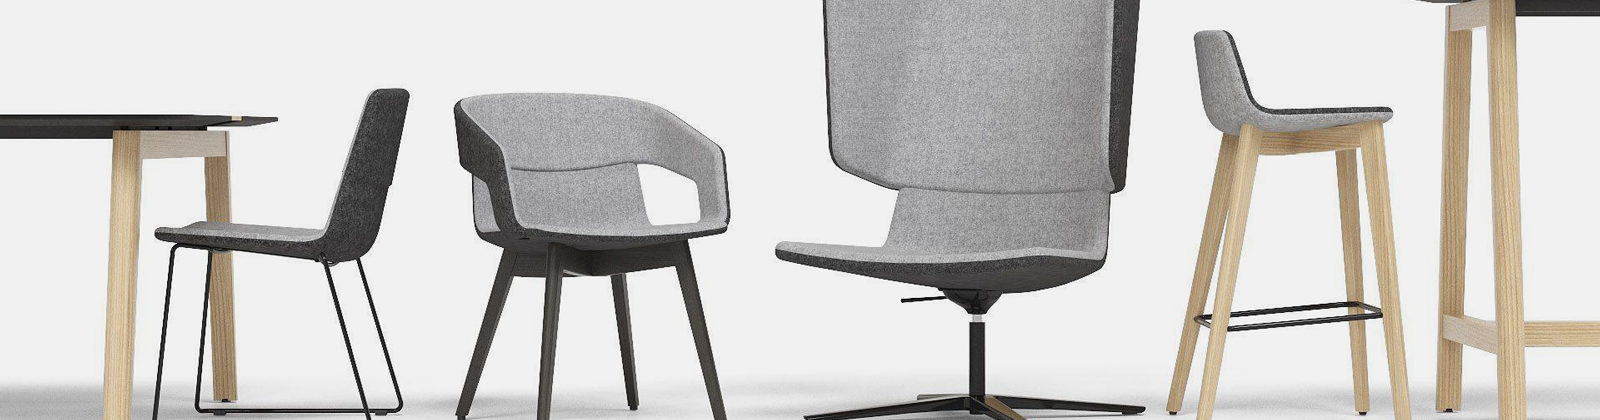 Twist & Sit Meeting and Lounge Chair Range